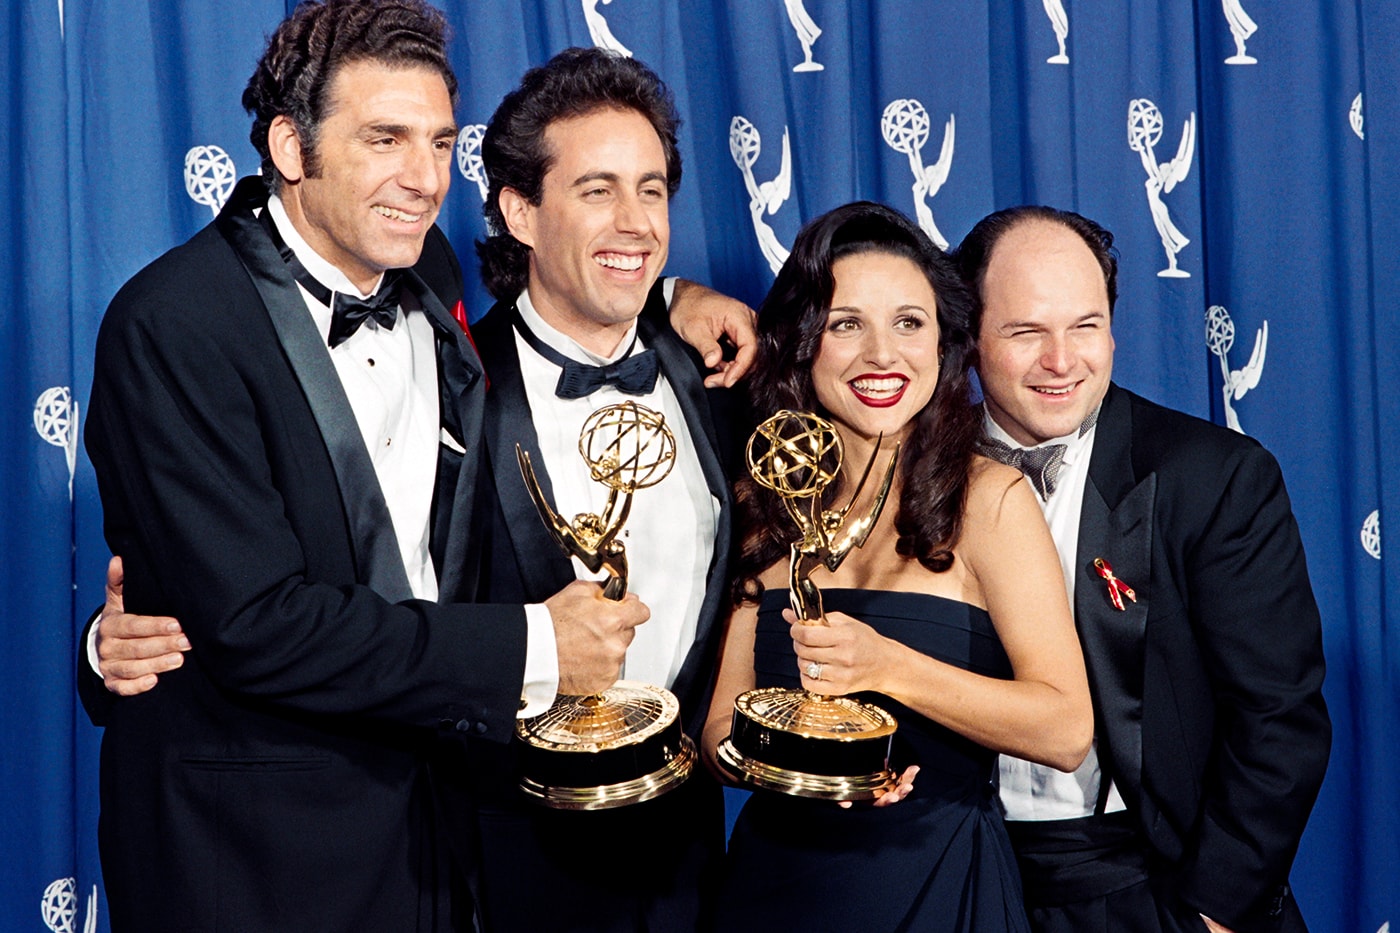 Seinfeld Cast reunion Texas Democratic Party Fundraiser Larry David, Julia Louis-Dreyfus, Jason Alexander seth myers  David Mandel